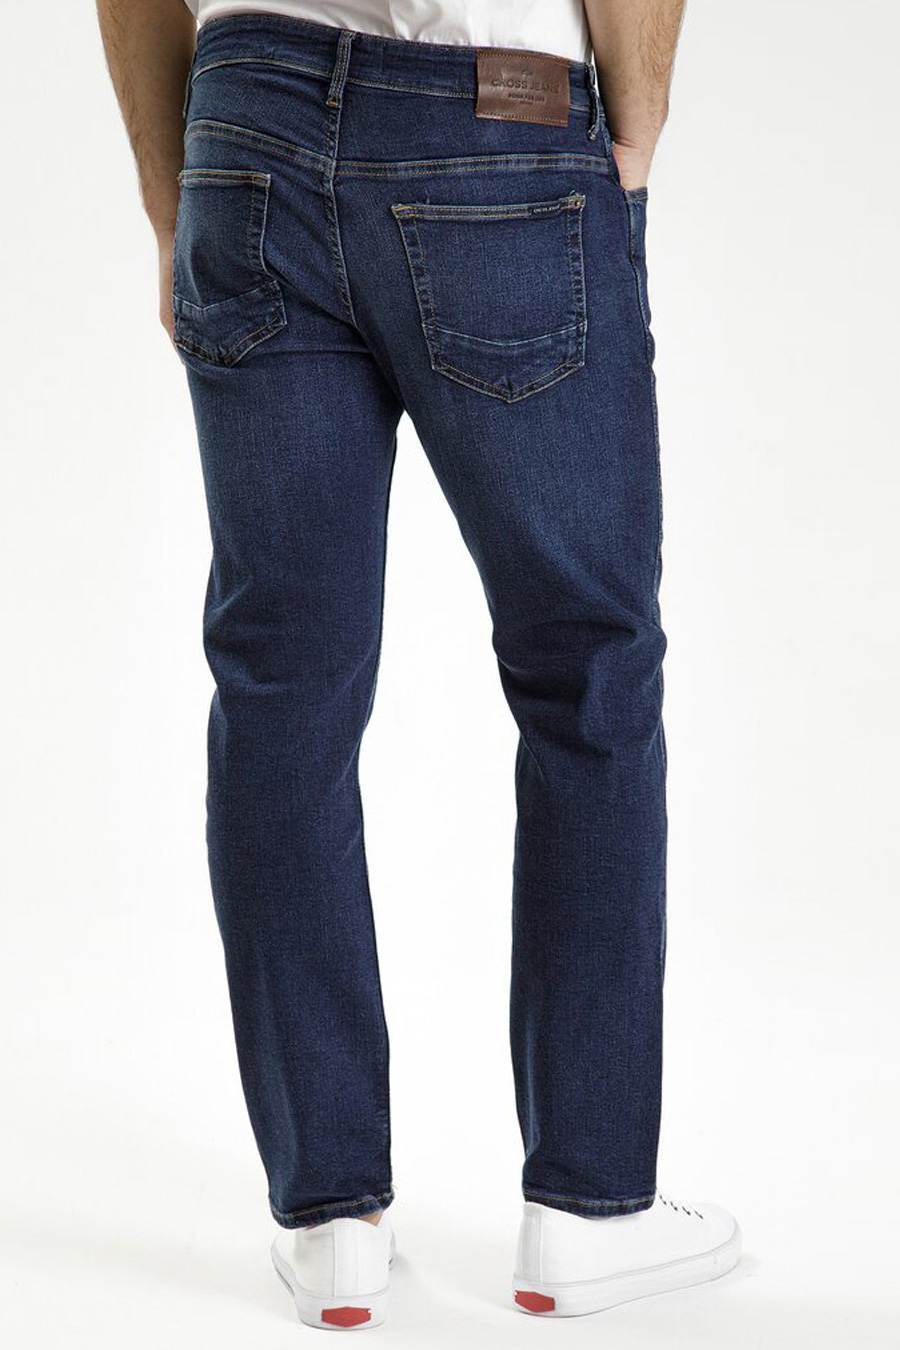 Jeans CROSS JEANS C132-076